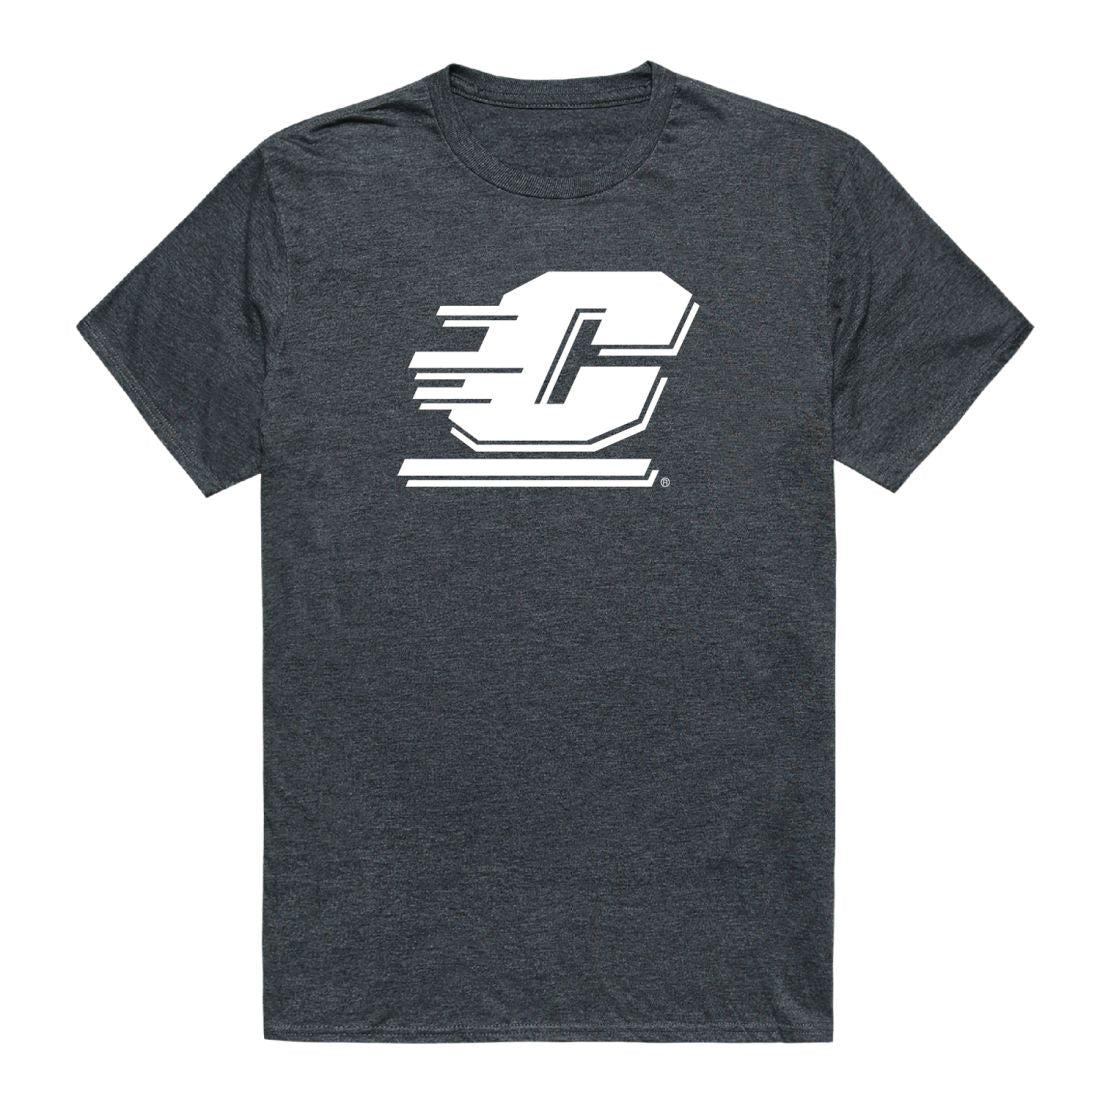 CMU Central Michigan University Chippewas Cinder College T-Shirt